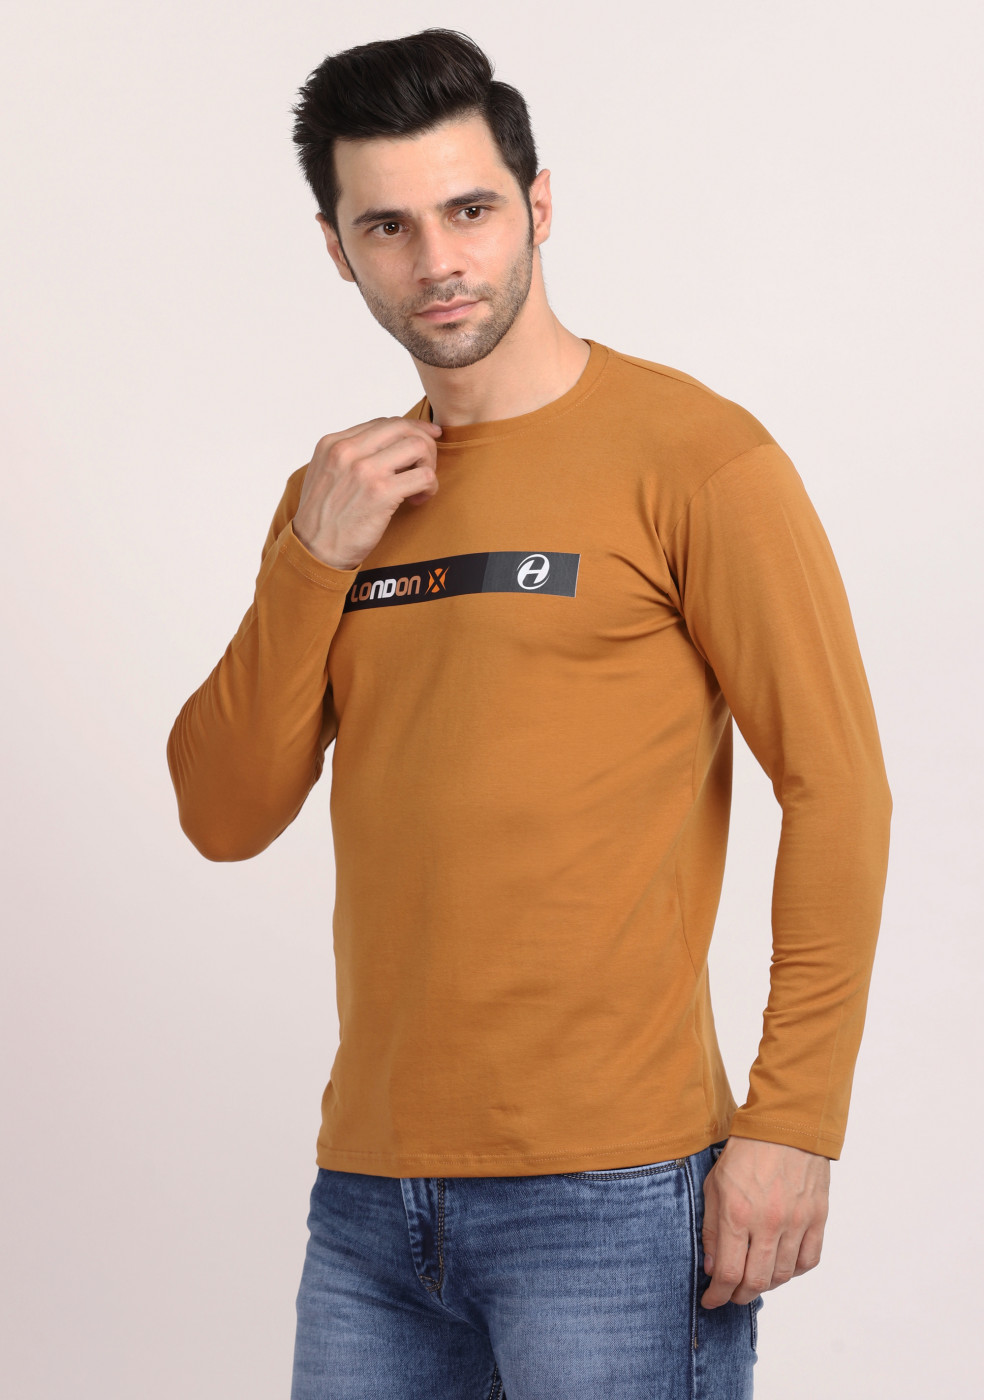 HUKH Full Sleeve Mustard T Shirt Cotton Lycra Fabric for Men